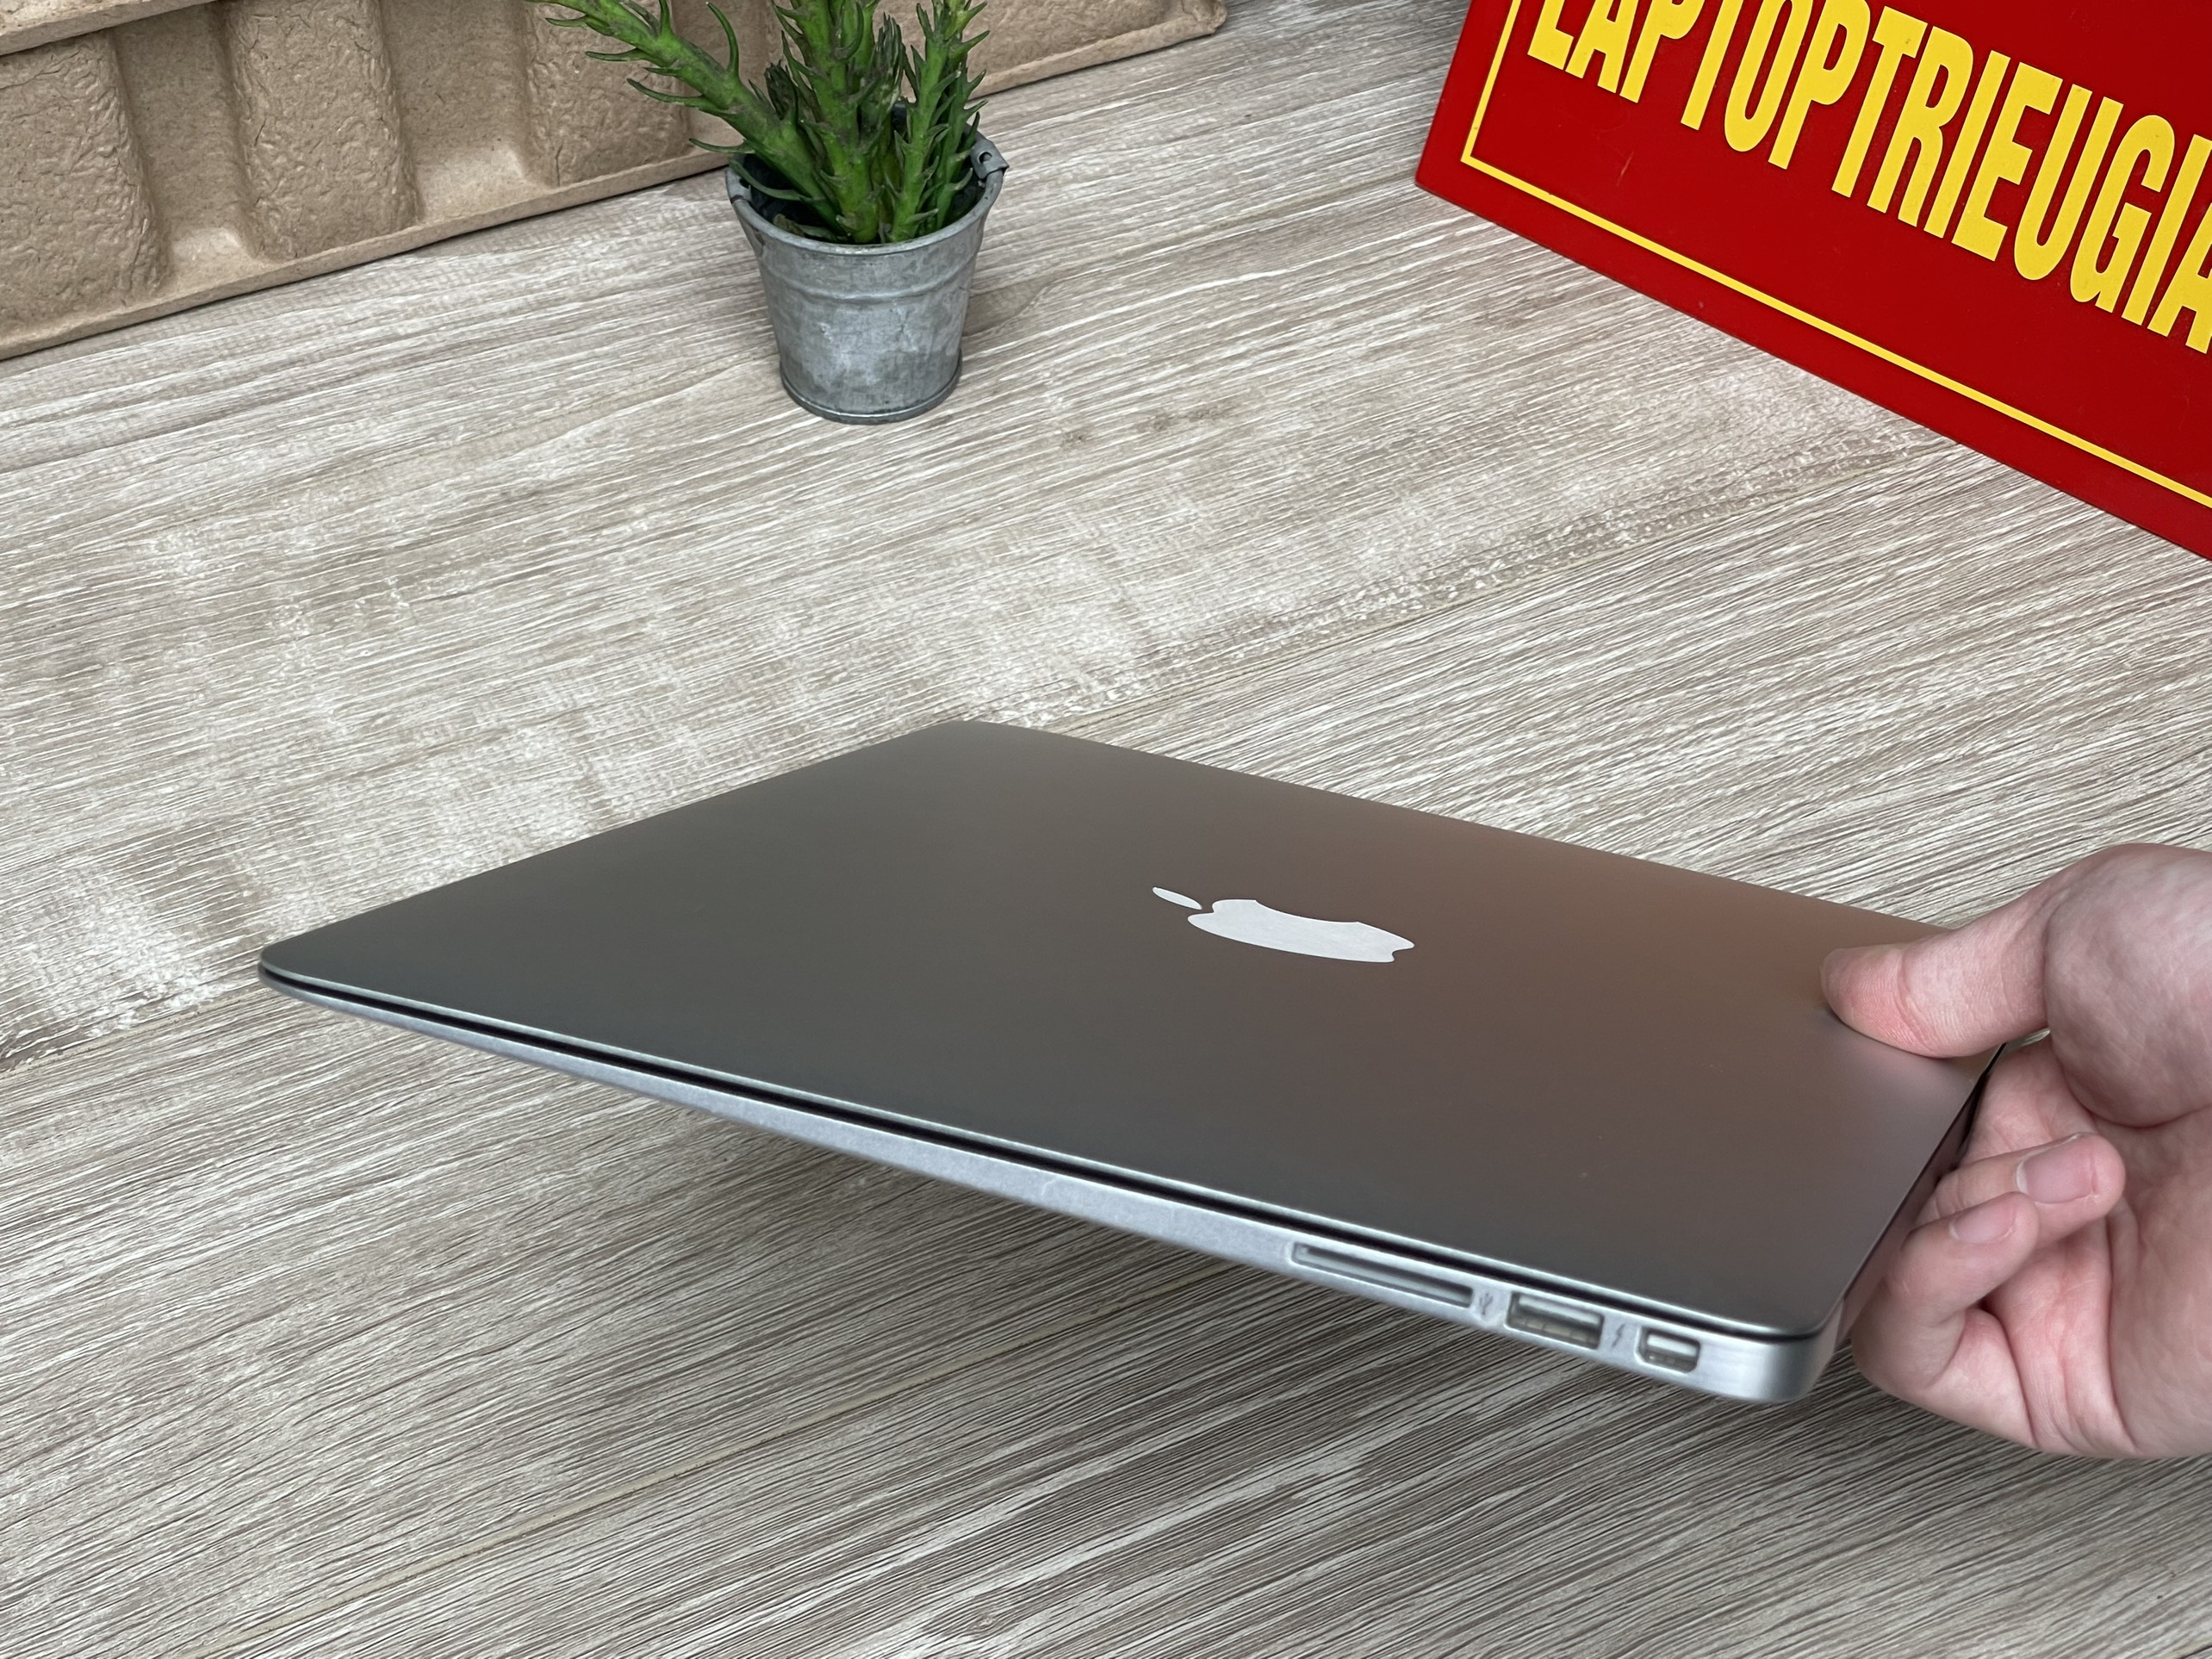 Macbook Air MQD32 ( đời 2017 ) : i5 | Ram 8Gb| SSD 128Gb | Màn 13.3 inch Retina